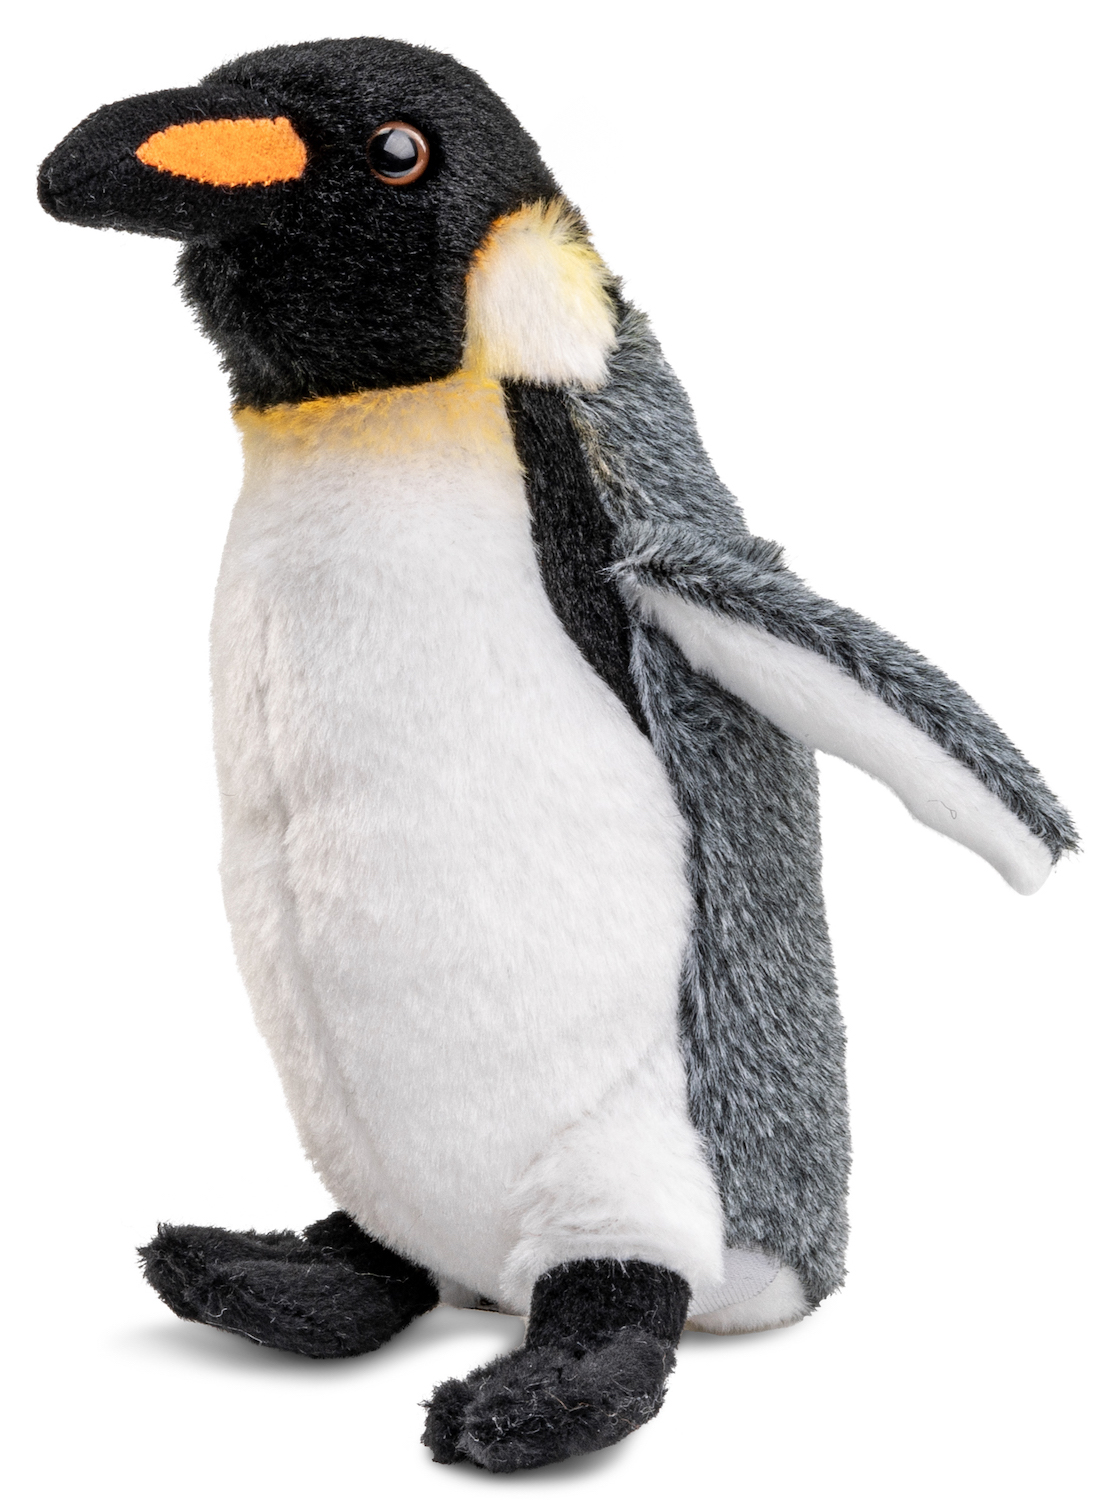 Emperor Penguin - 19 cm (height) - Plush Bird, Penguin - Soft Toy, Cuddly Toy